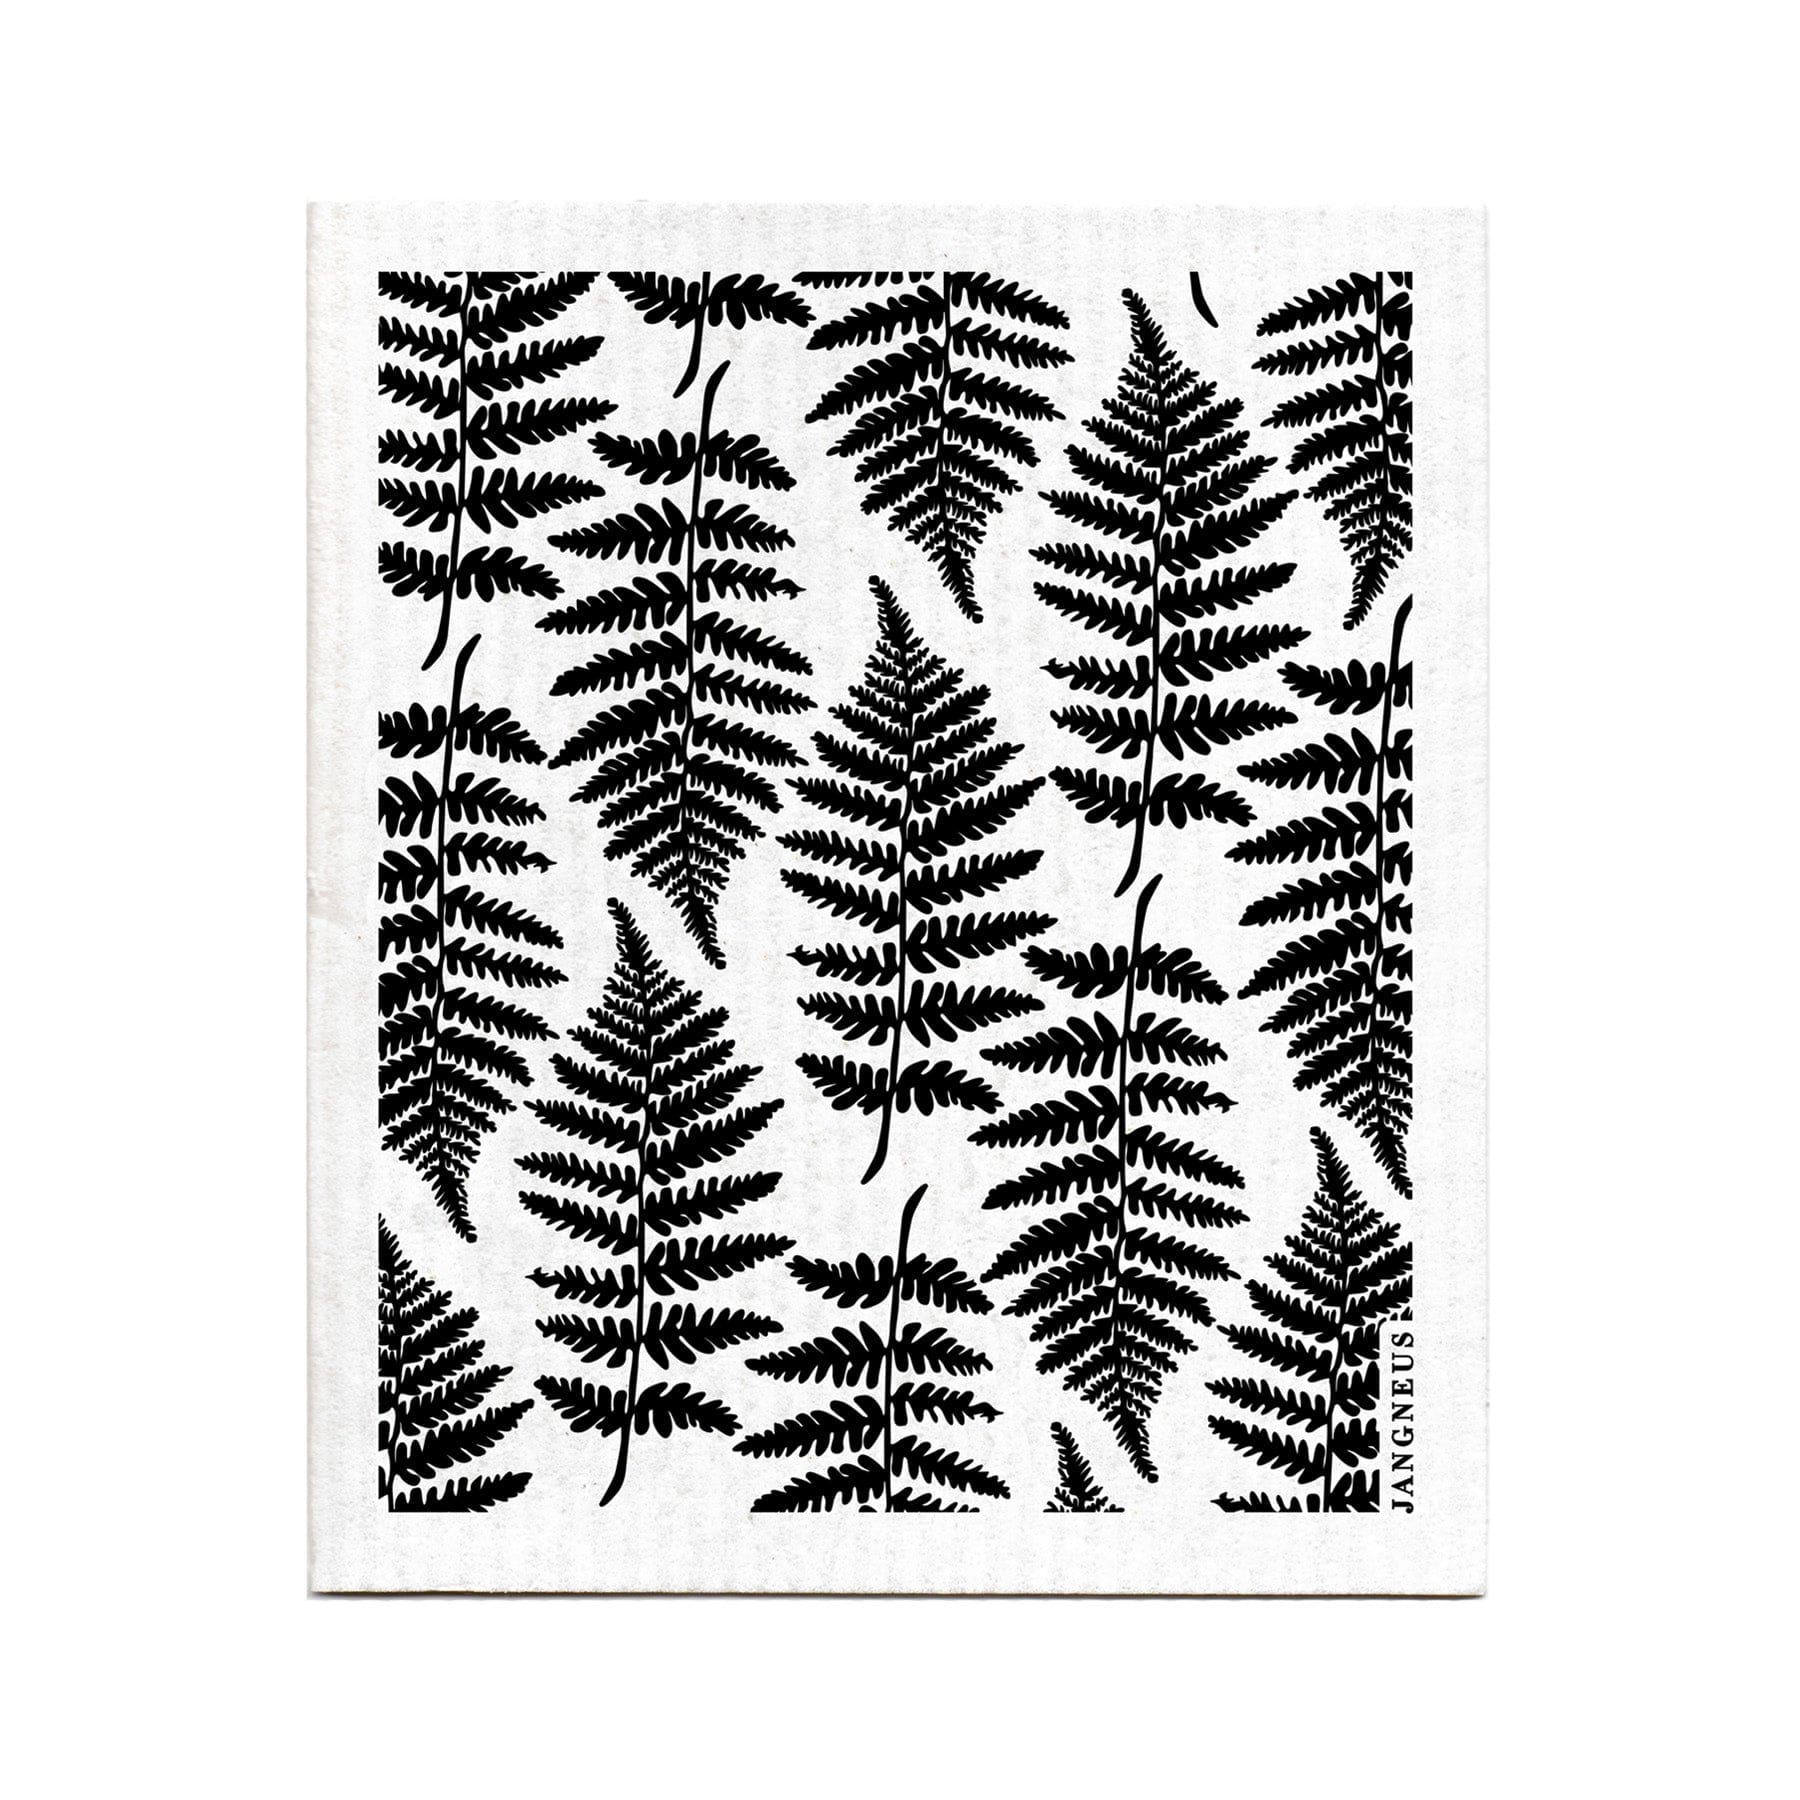 Black and white illustration of fern leaves, botanical print, nature-inspired home decor, minimalist plant artwork, textured paper background.